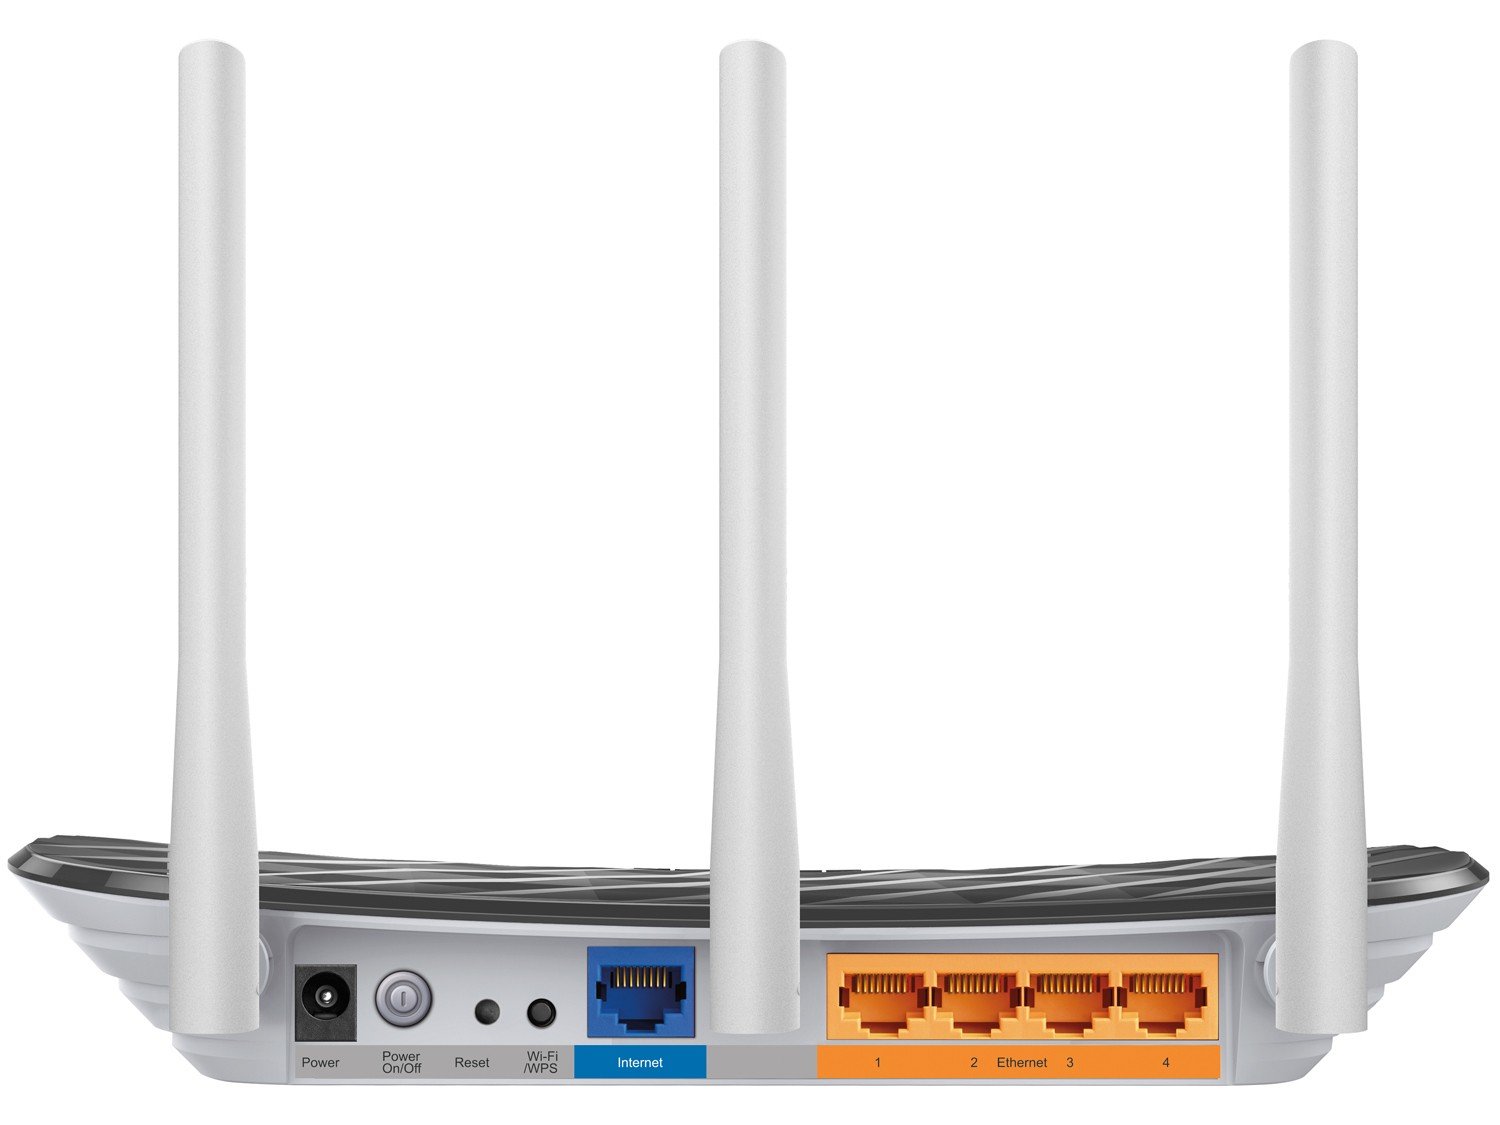 Roteador Wireless Tp-link Archer C20 733mbps - 3 Antenas 4 Portas Dual Band - 1